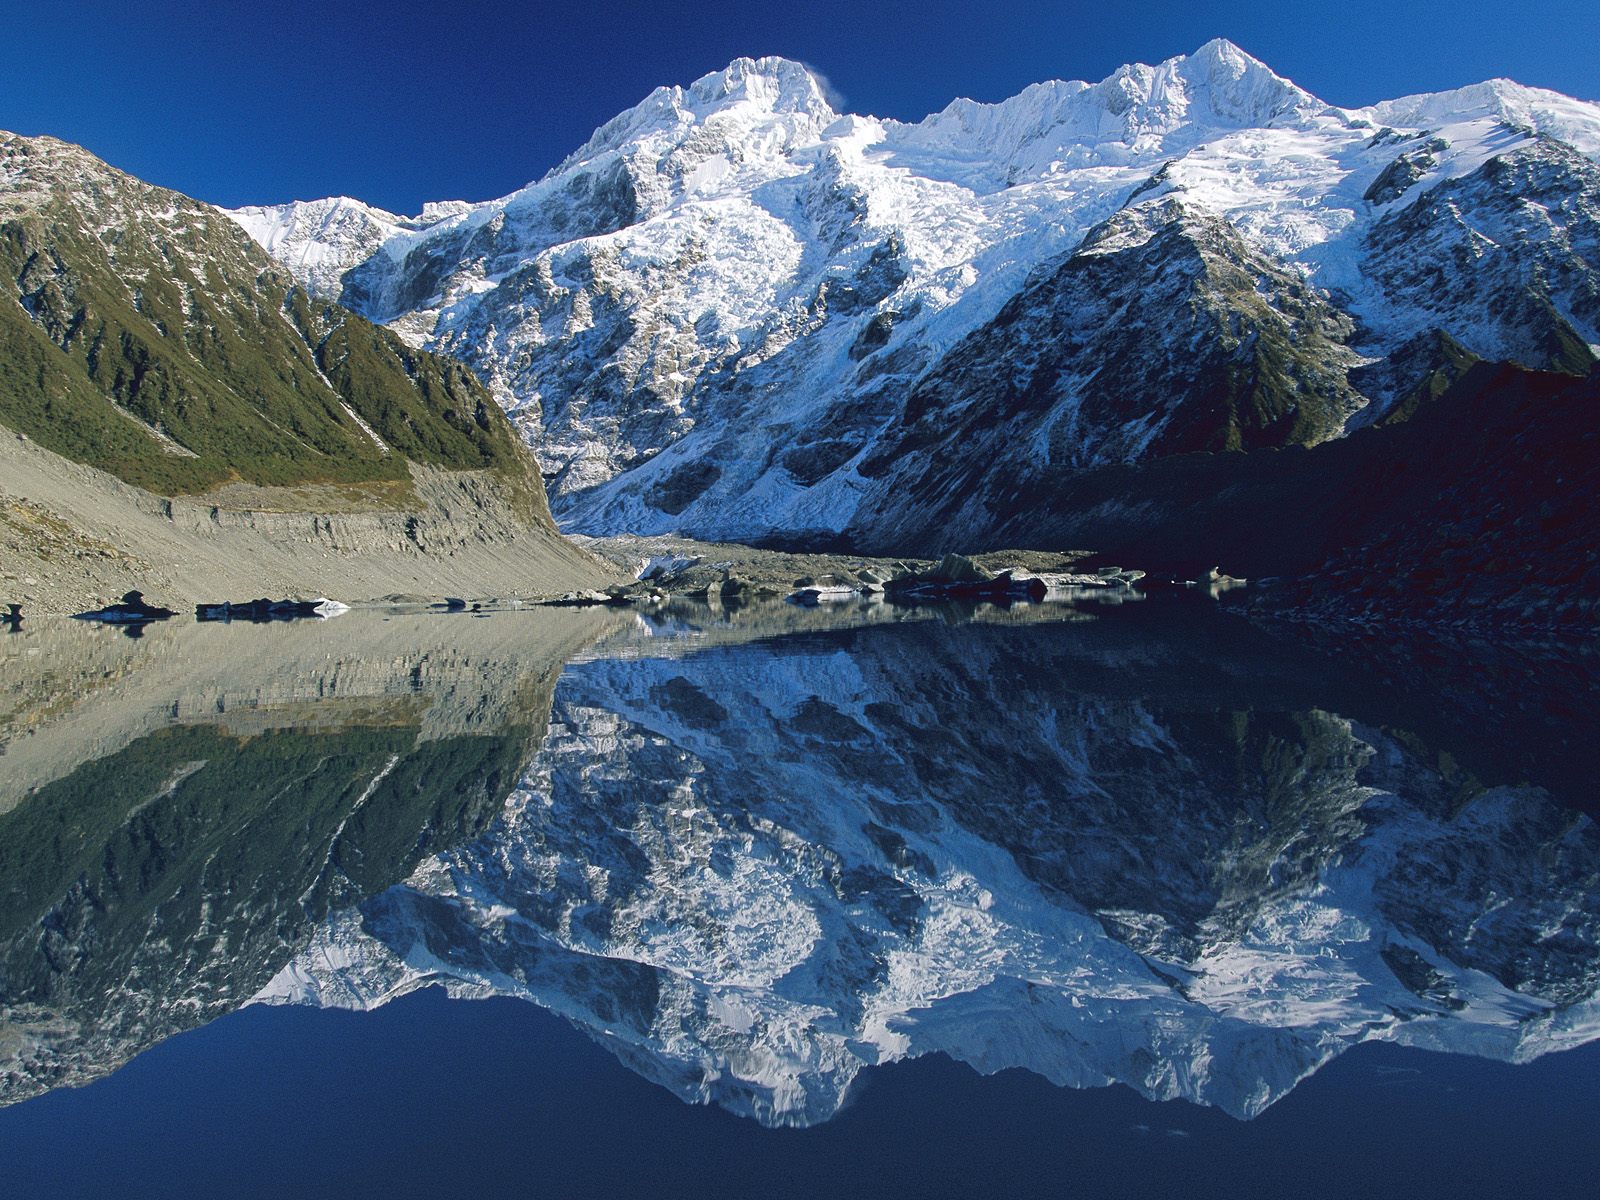 https://blogger.googleusercontent.com/img/b/R29vZ2xl/AVvXsEi-sU2DS20s5xMZVm4lWOc2PHd78E5Fxqoa7s6No7tlgaNKYtxzQDQI5FtRMYw5QJgheDejFUC43OdRqysRYfOjHqh1AfZsDAq7EiMbLxFeNijMgfeRDXF3GvL1zHAneXqnsgG5Ij2GLG8W/s1600/Mount+Sefton+Reflected+in+Mueller+Glacier+Lake,+Mount+Cook+National+Park,+New+Zealand.jpg